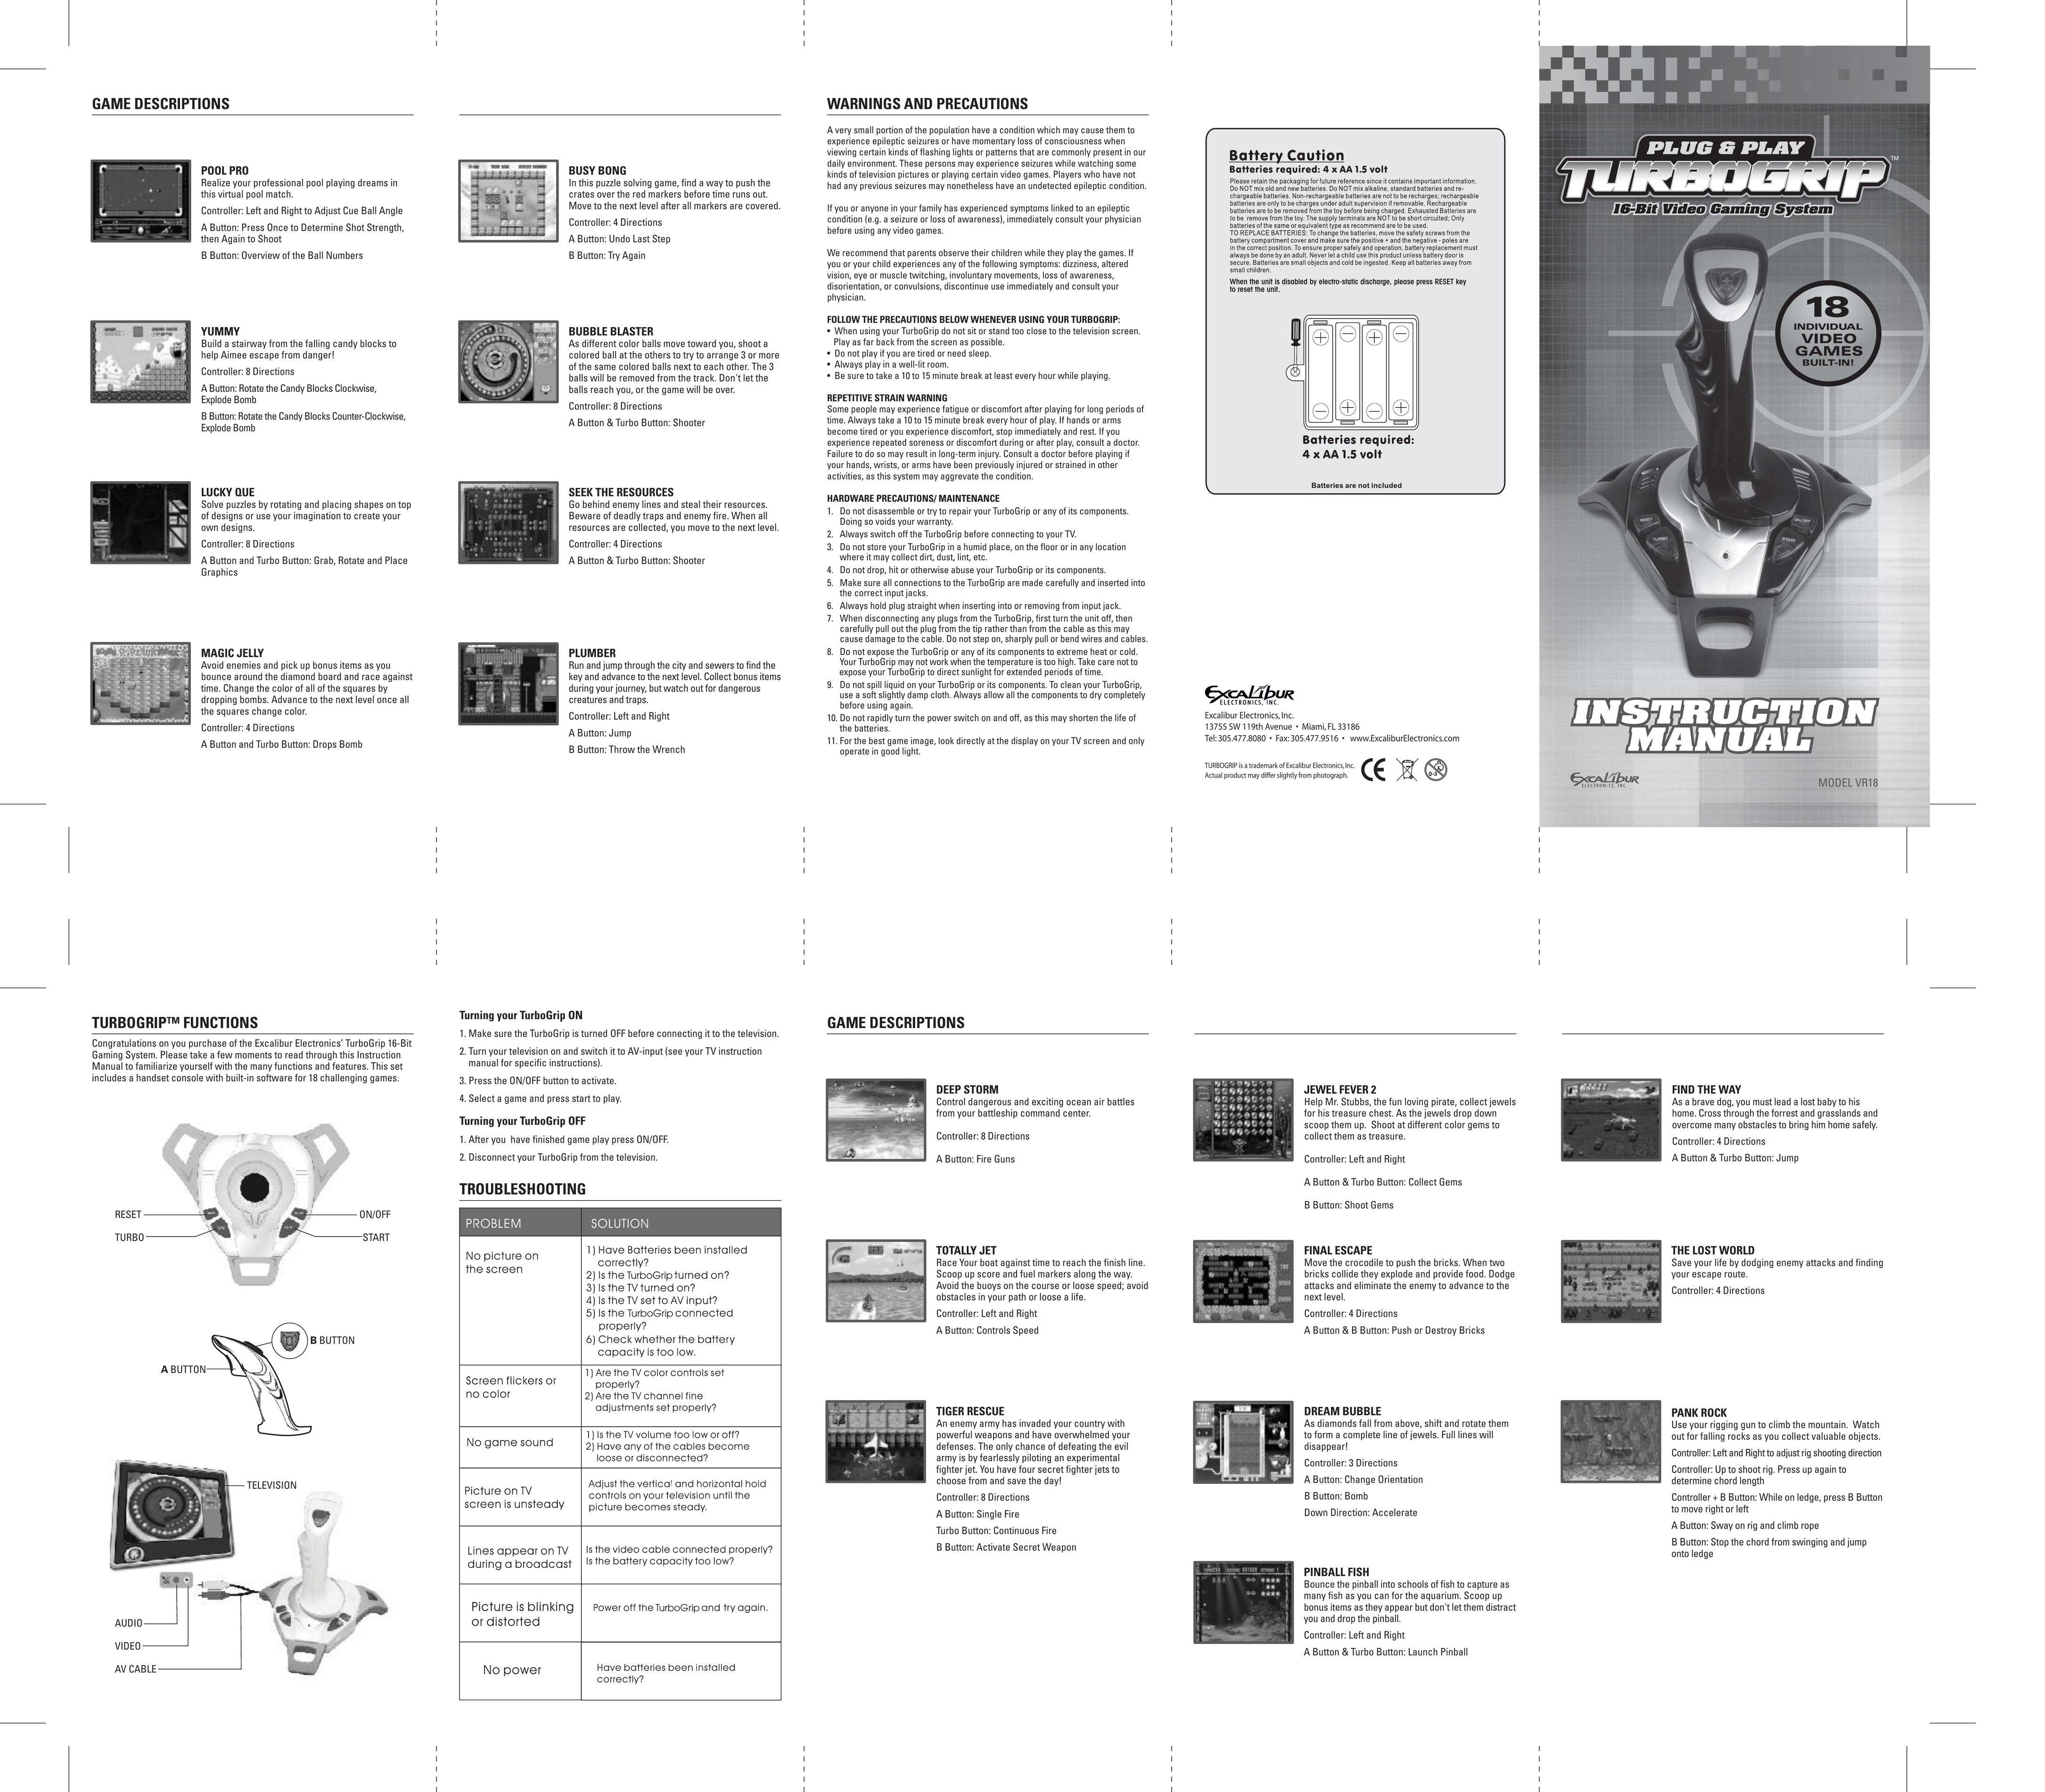 Excalibur electronic VR18 Handheld Game System User Manual